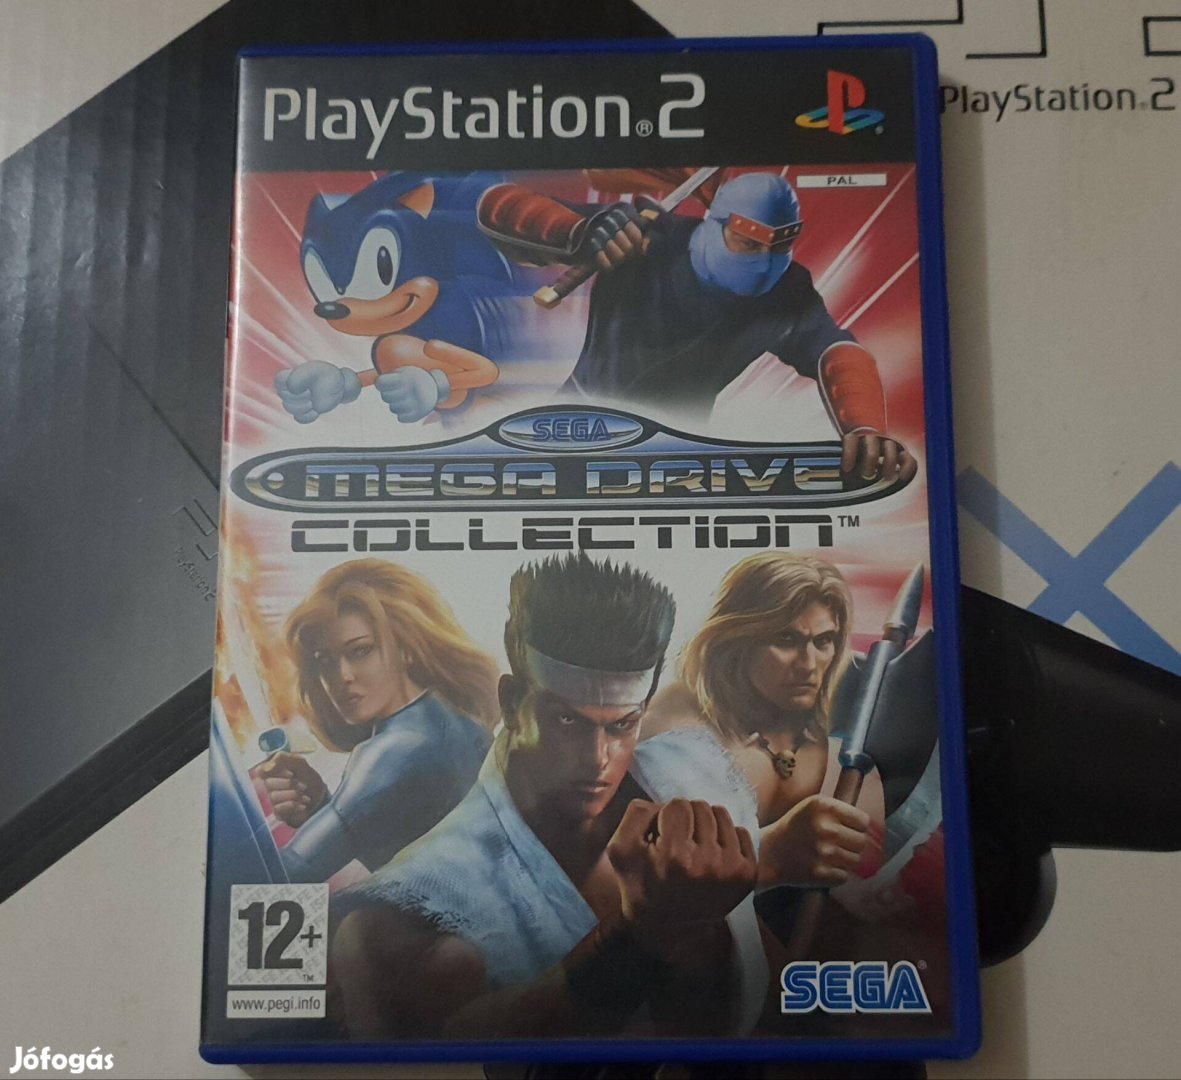 Sega Mega Drive Collection Playstation 2 eredeti lemez eladó